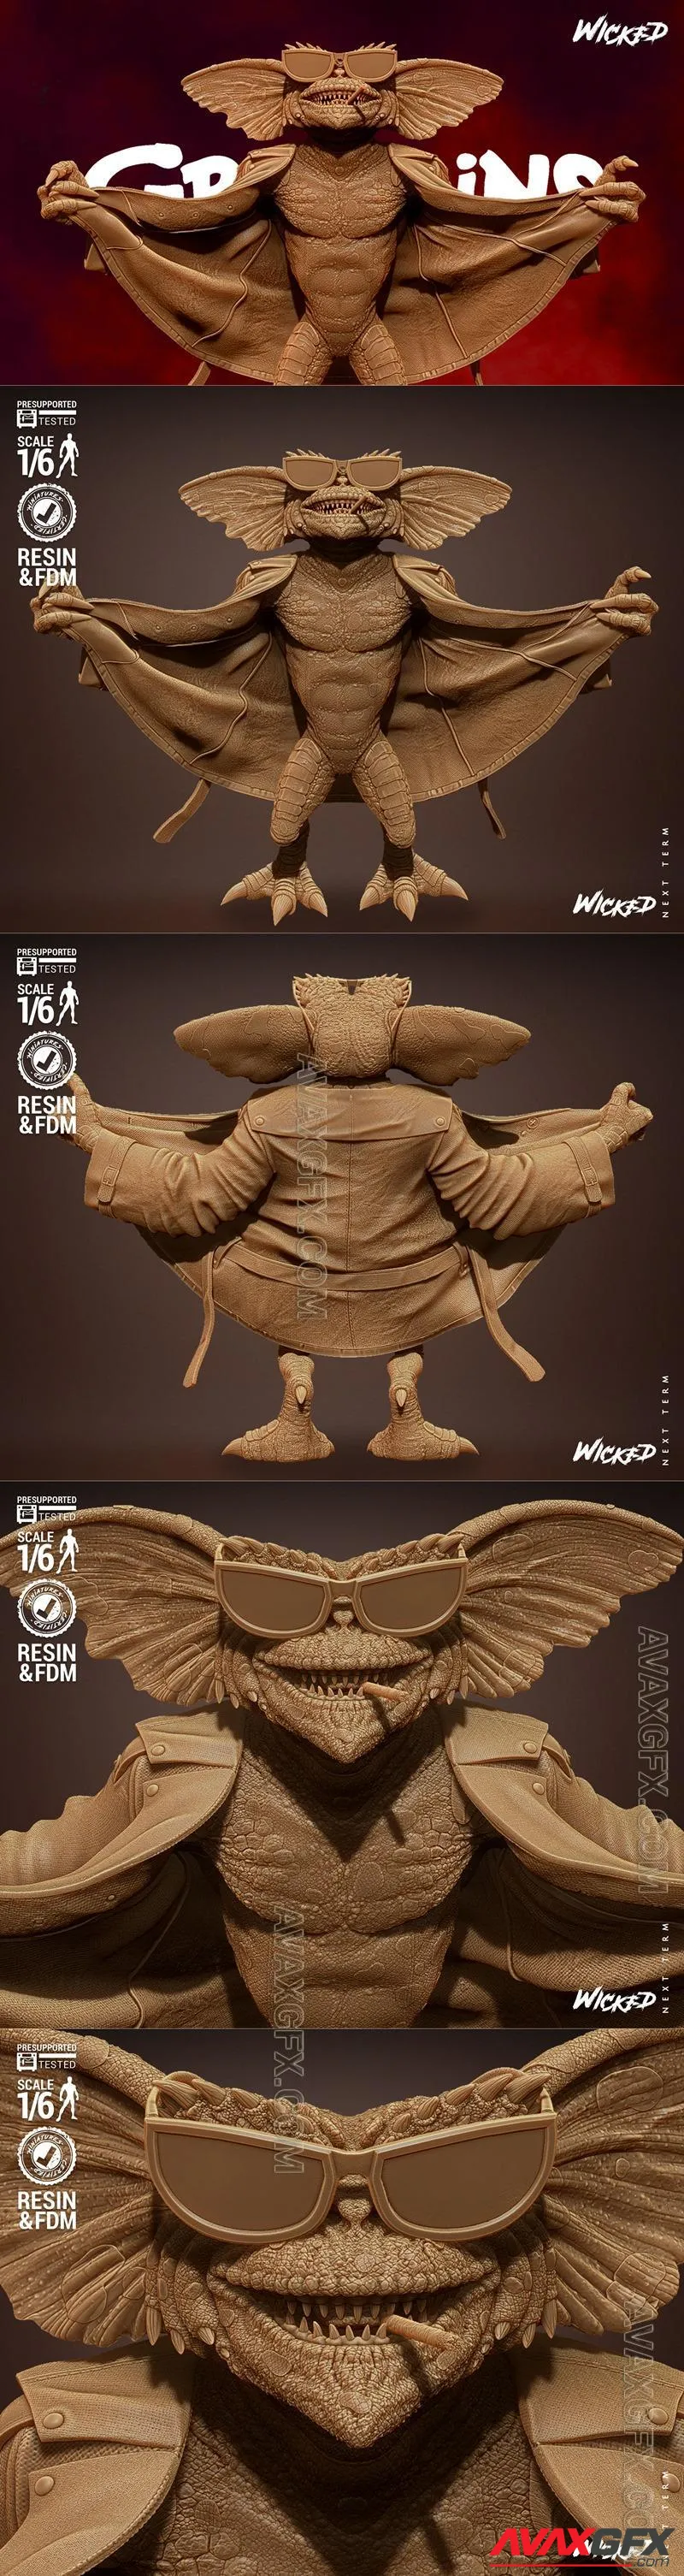 Wicked - Gremlins Flasher Sculpture - STL 3D Model